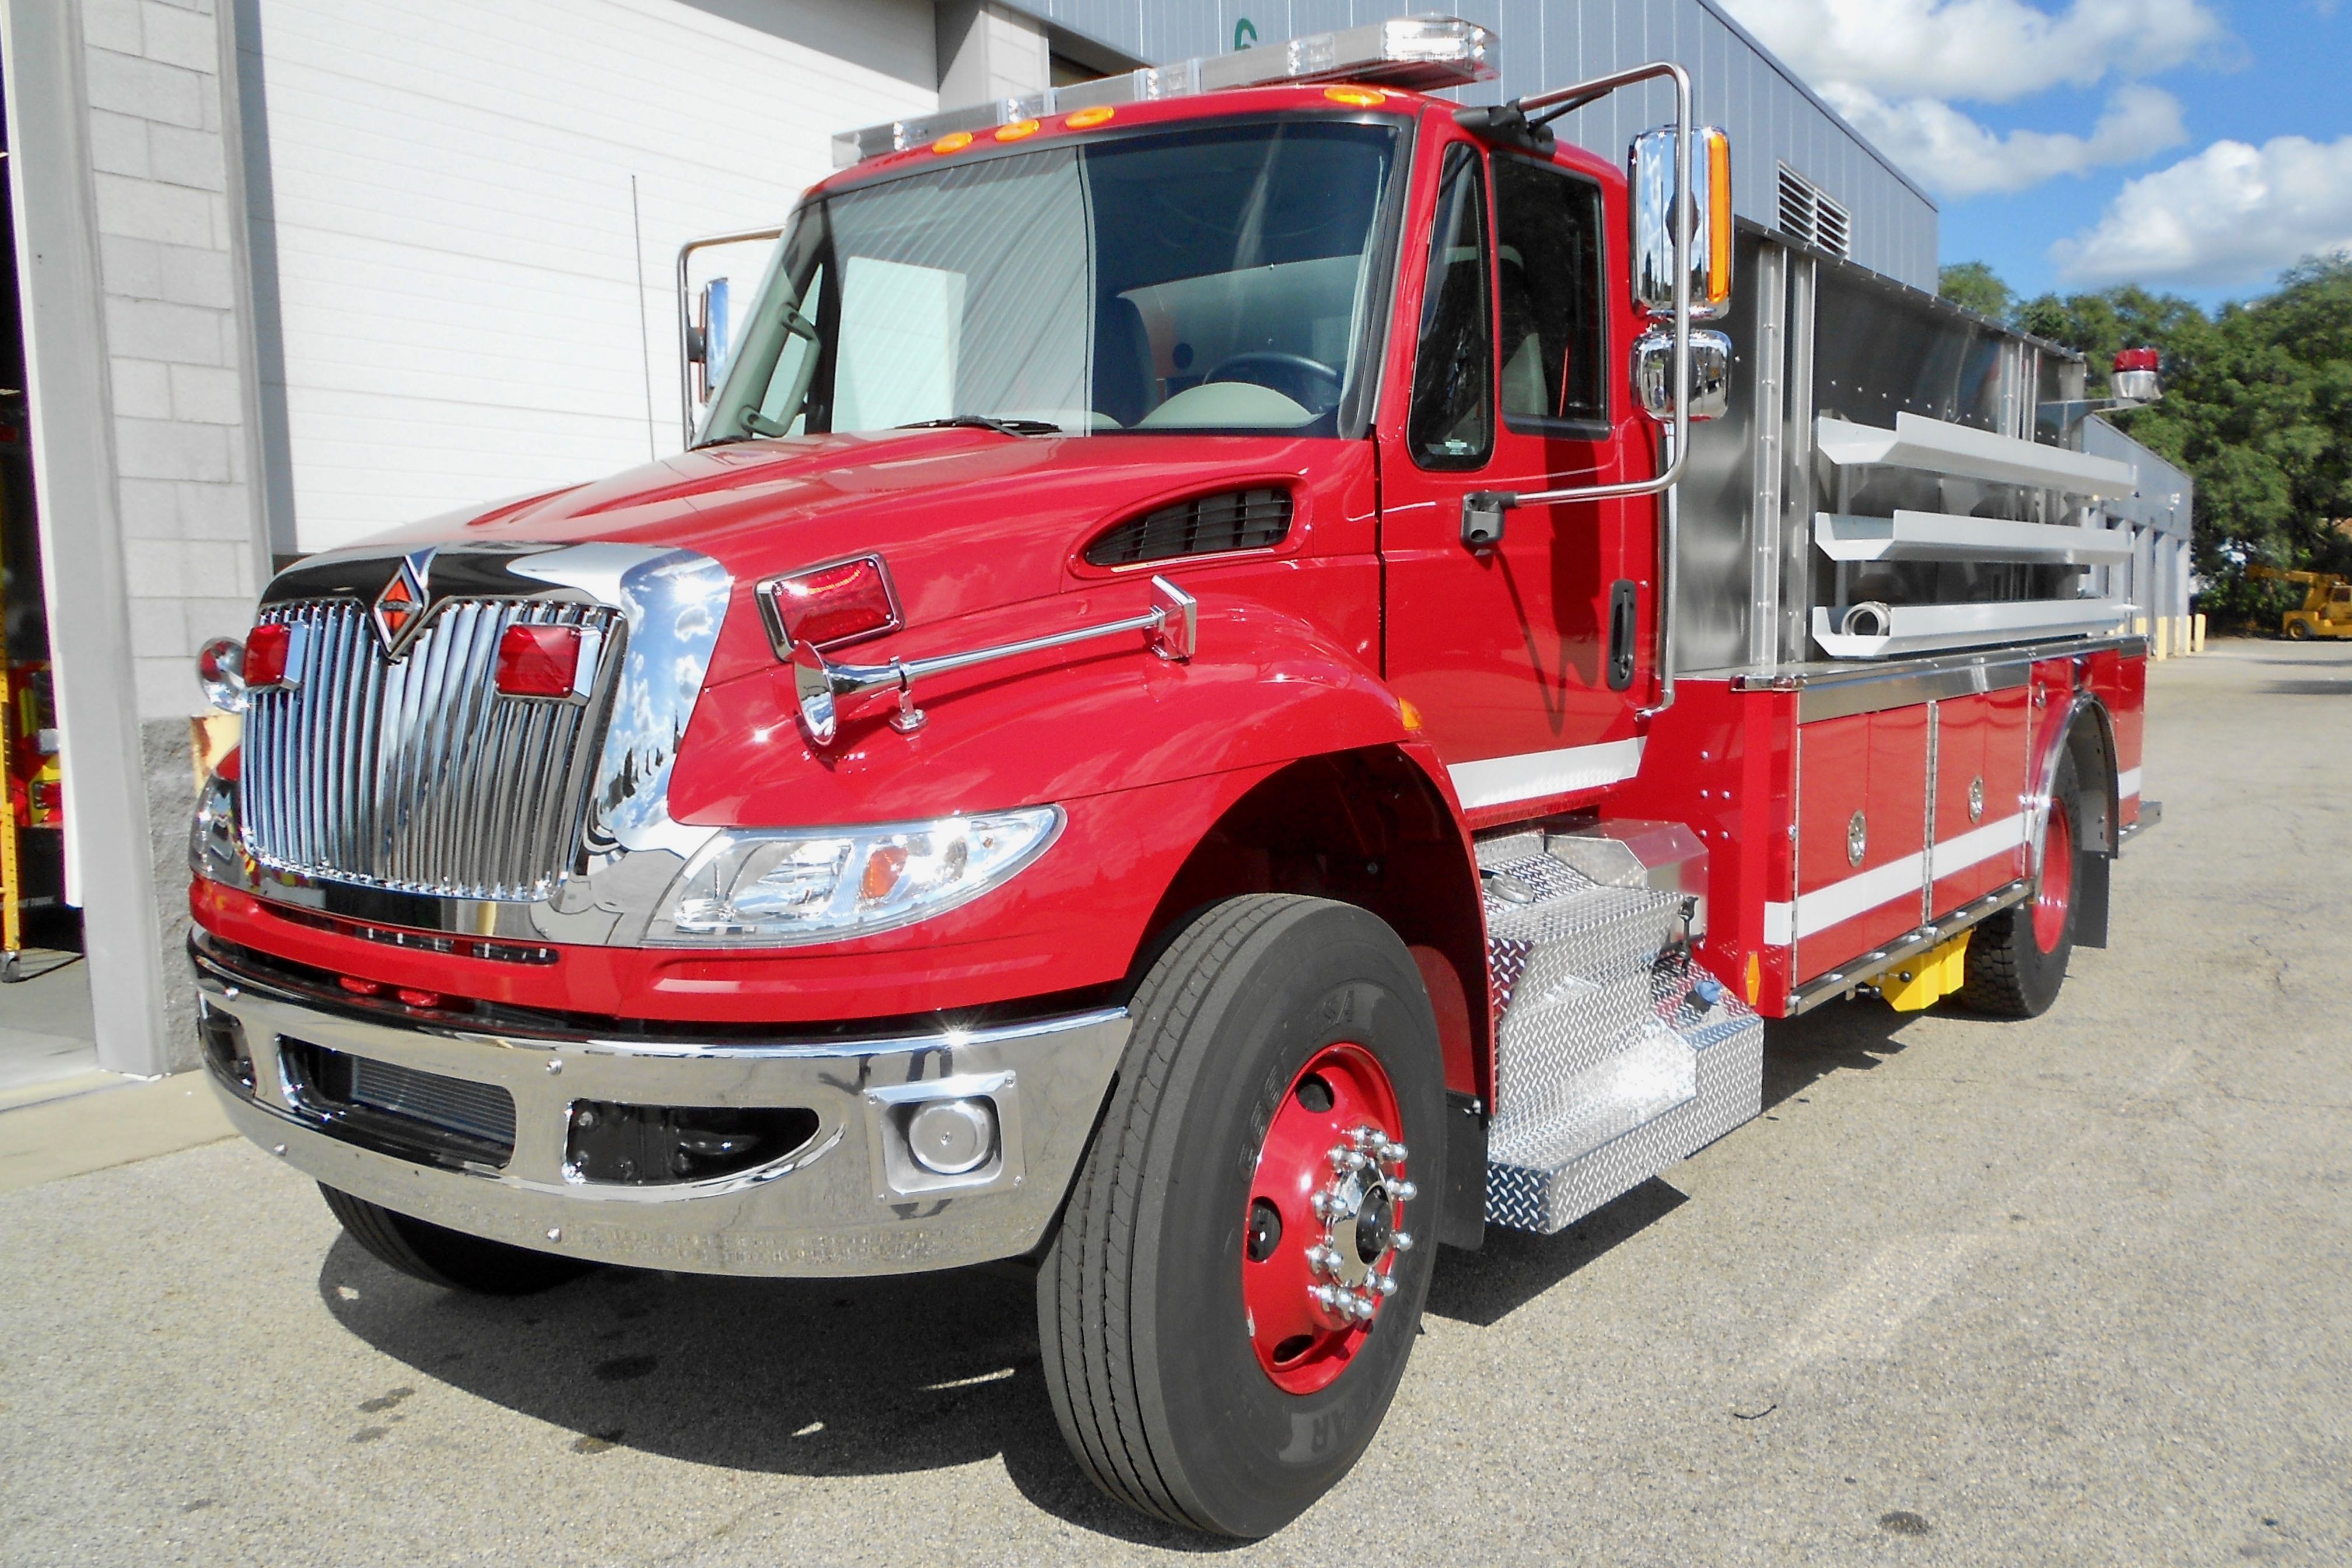 Sunshine Volunteer Fire Department District 404, NM – #22912